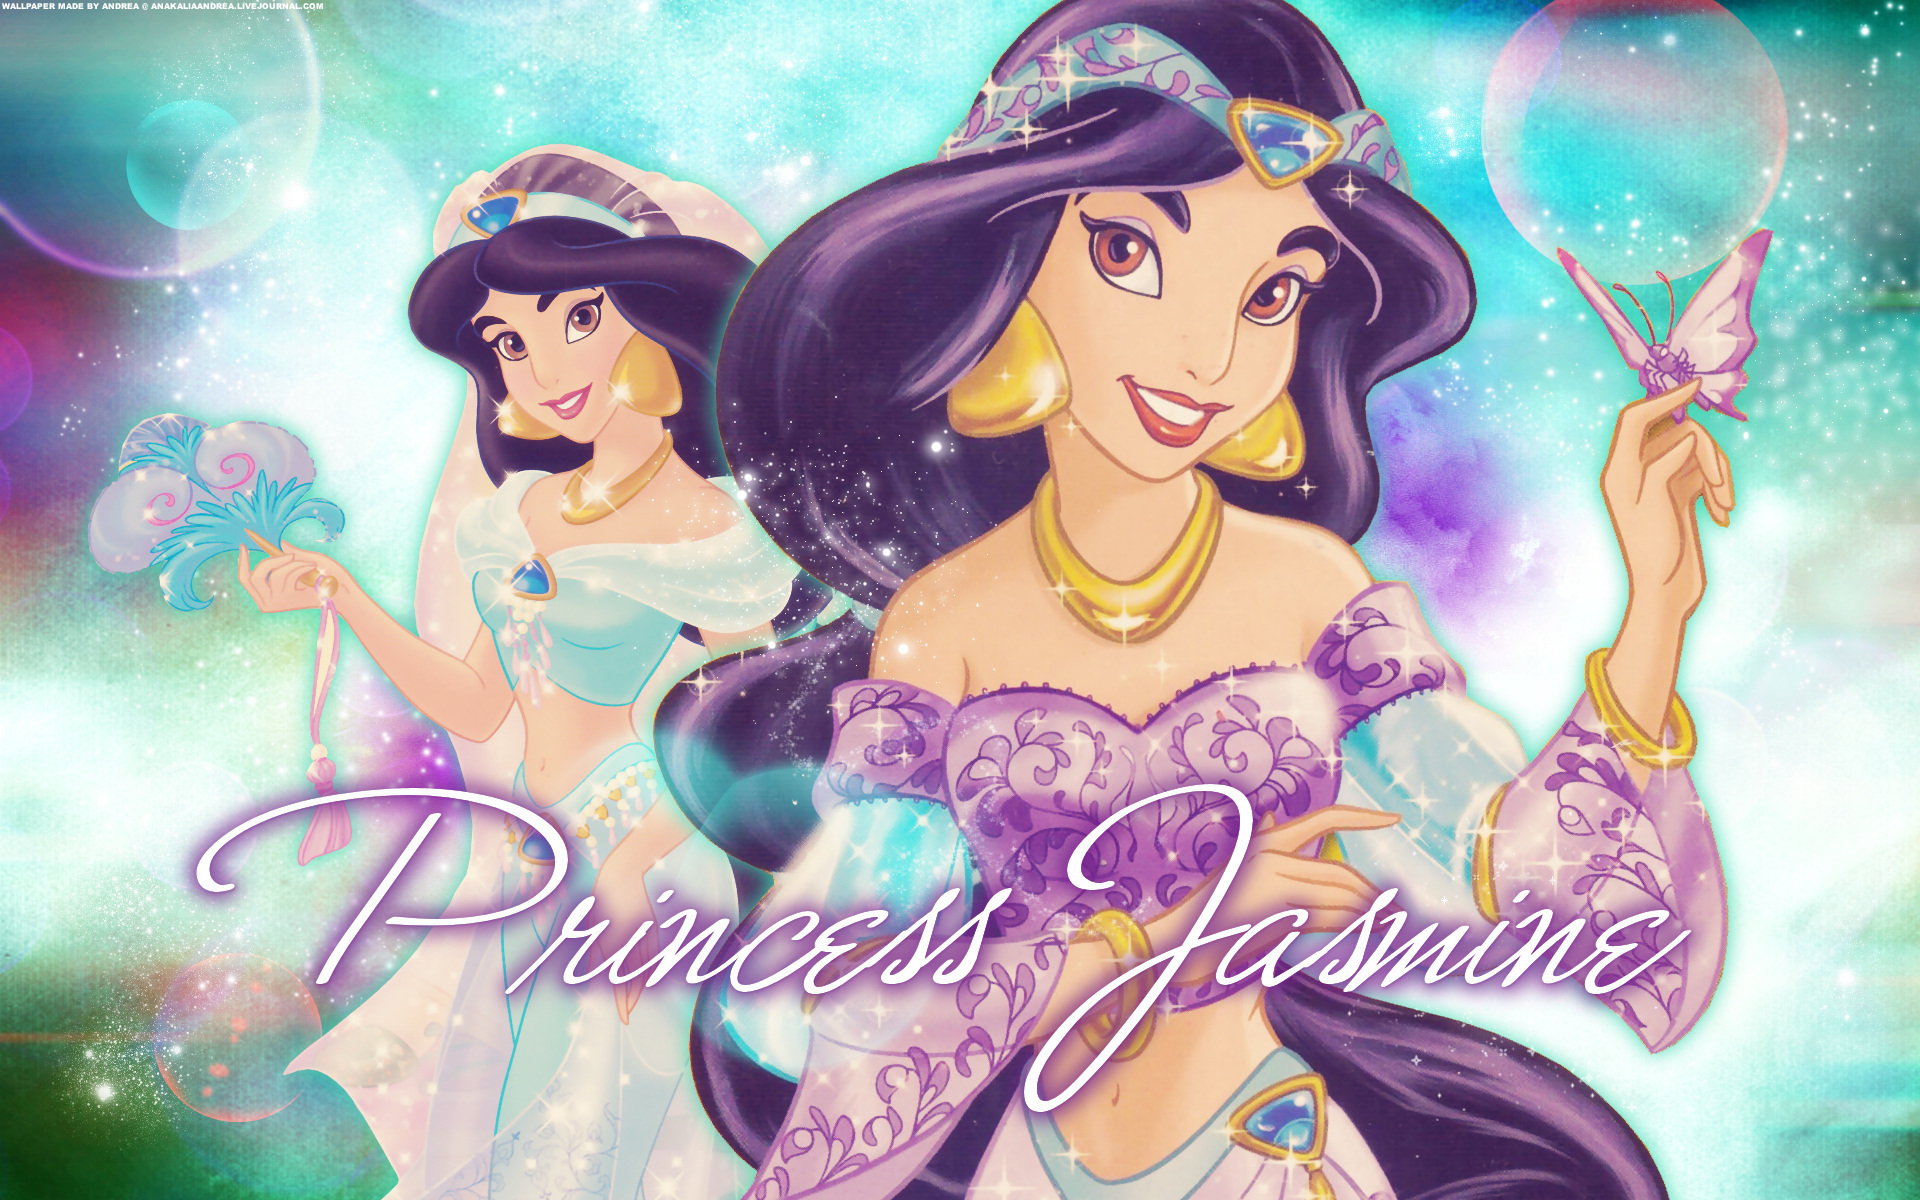 Free Download Jasmine Princess Jasmine Wallpaper 19x10 For Your Desktop Mobile Tablet Explore 49 Disney Princess Jasmine Wallpaper Disney Princess Wallpapers Disney Princess Wallpapers Free Download